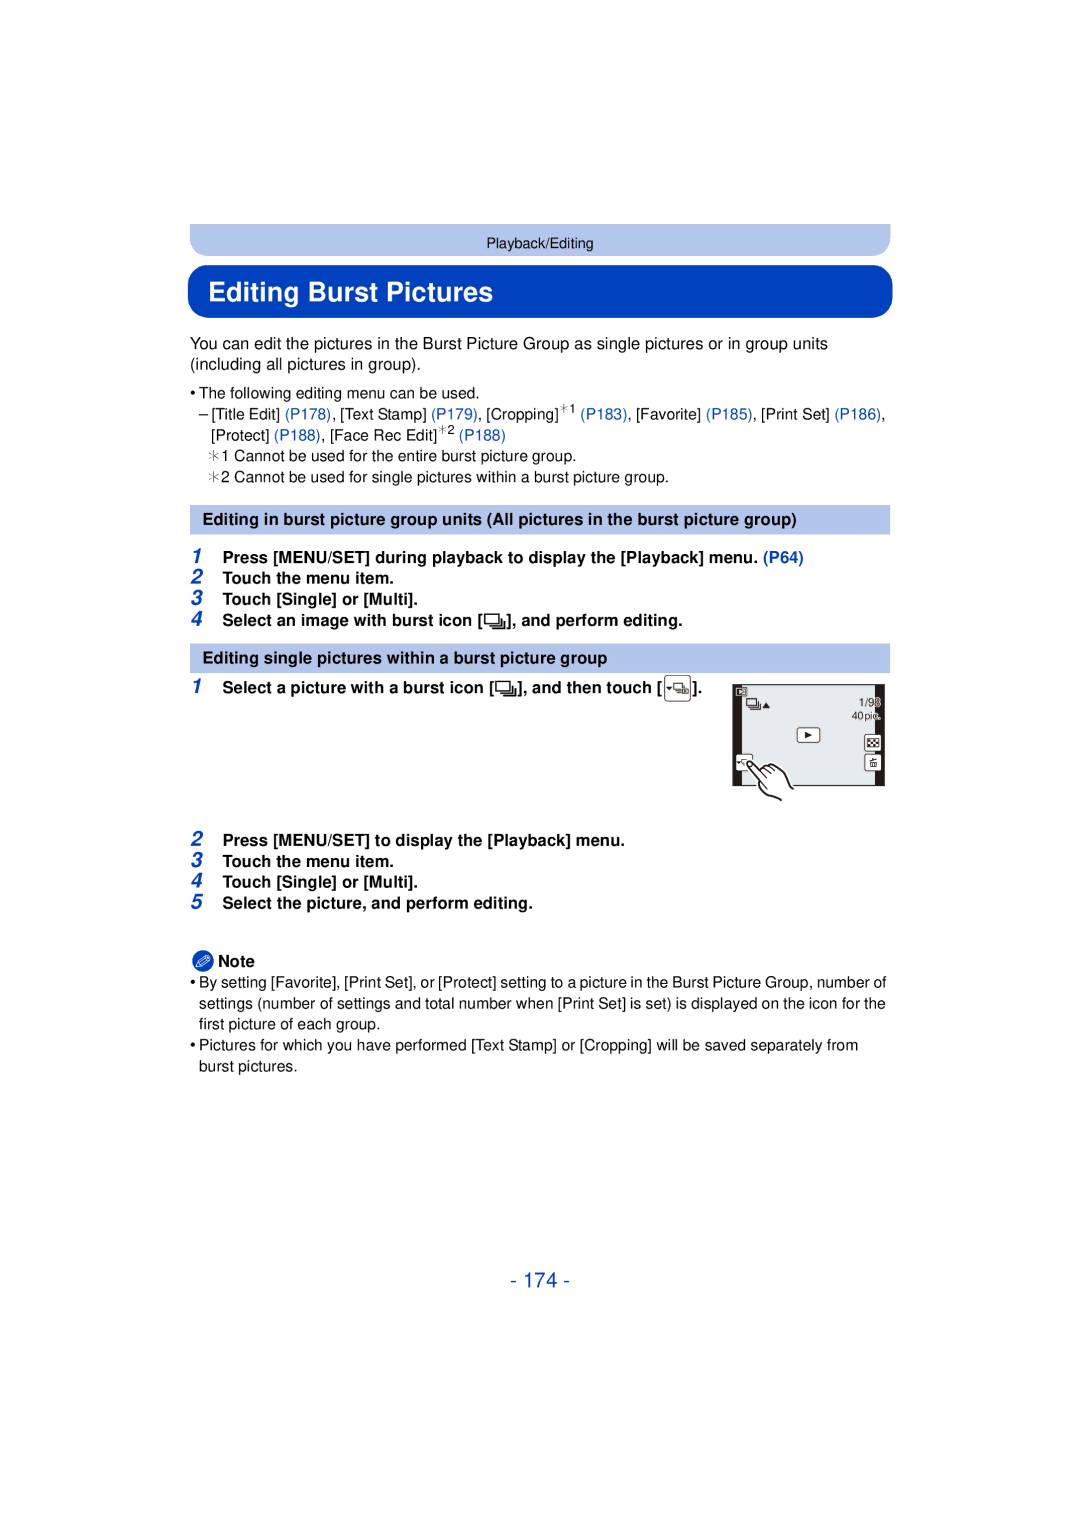 Panasonic DMCG5KK, F0612MC0, VQT4H13 owner manual Editing Burst Pictures, 174 